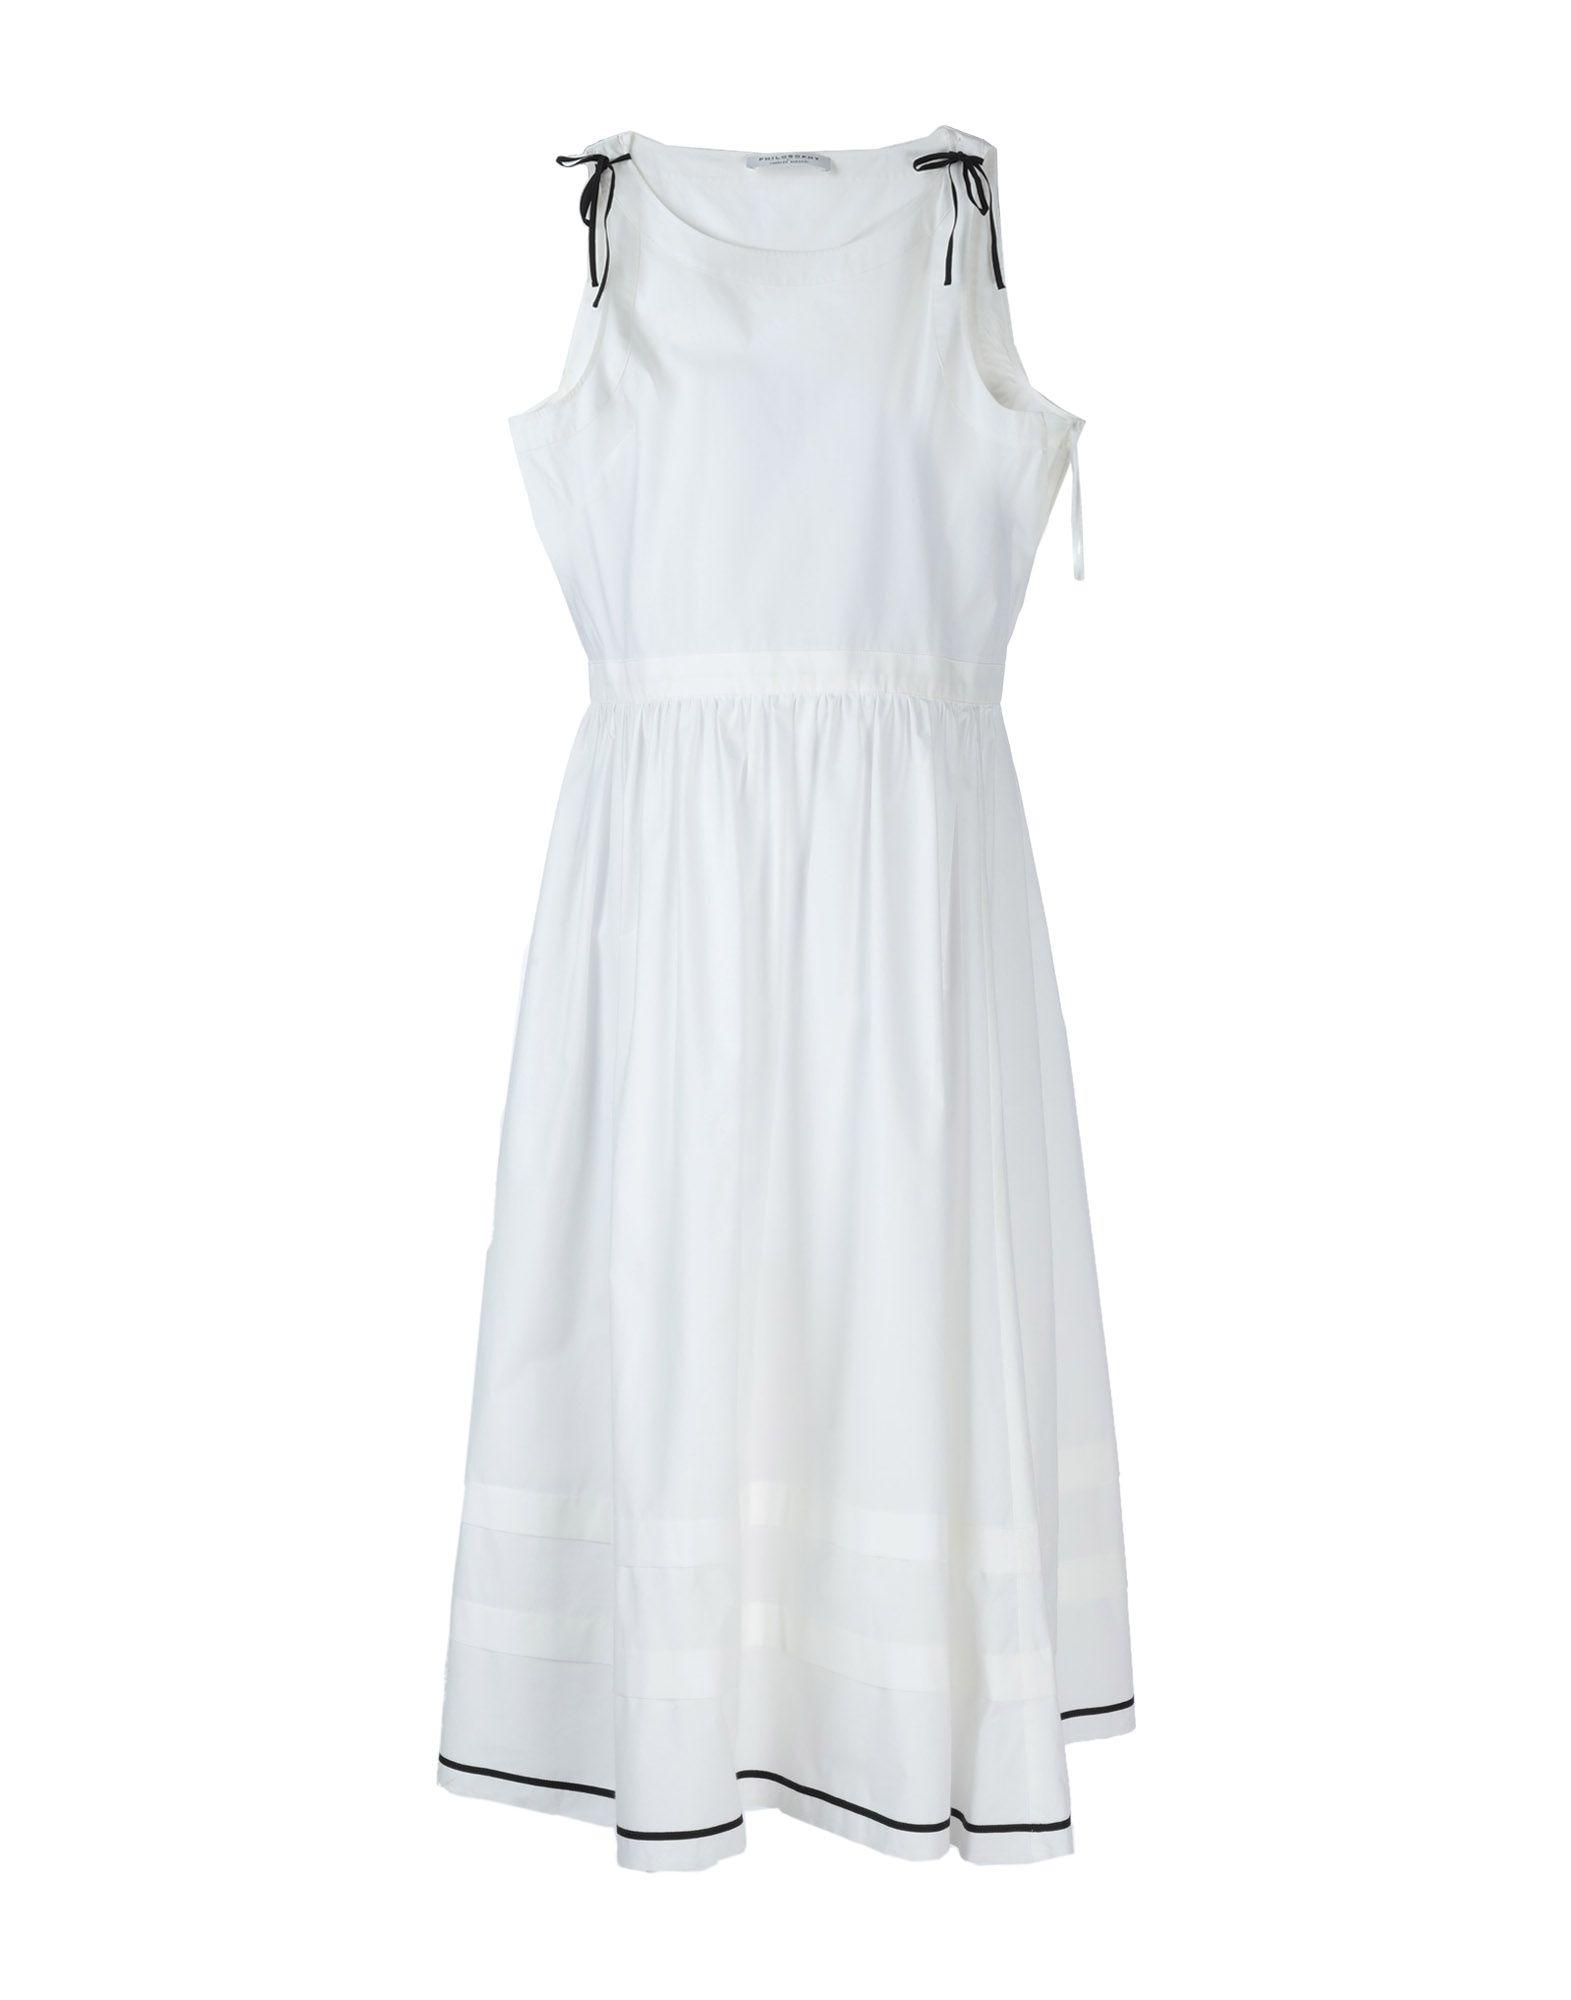 Philosophy Di Lorenzo Serafini Cotton 3/4 Length Dress in White - Lyst